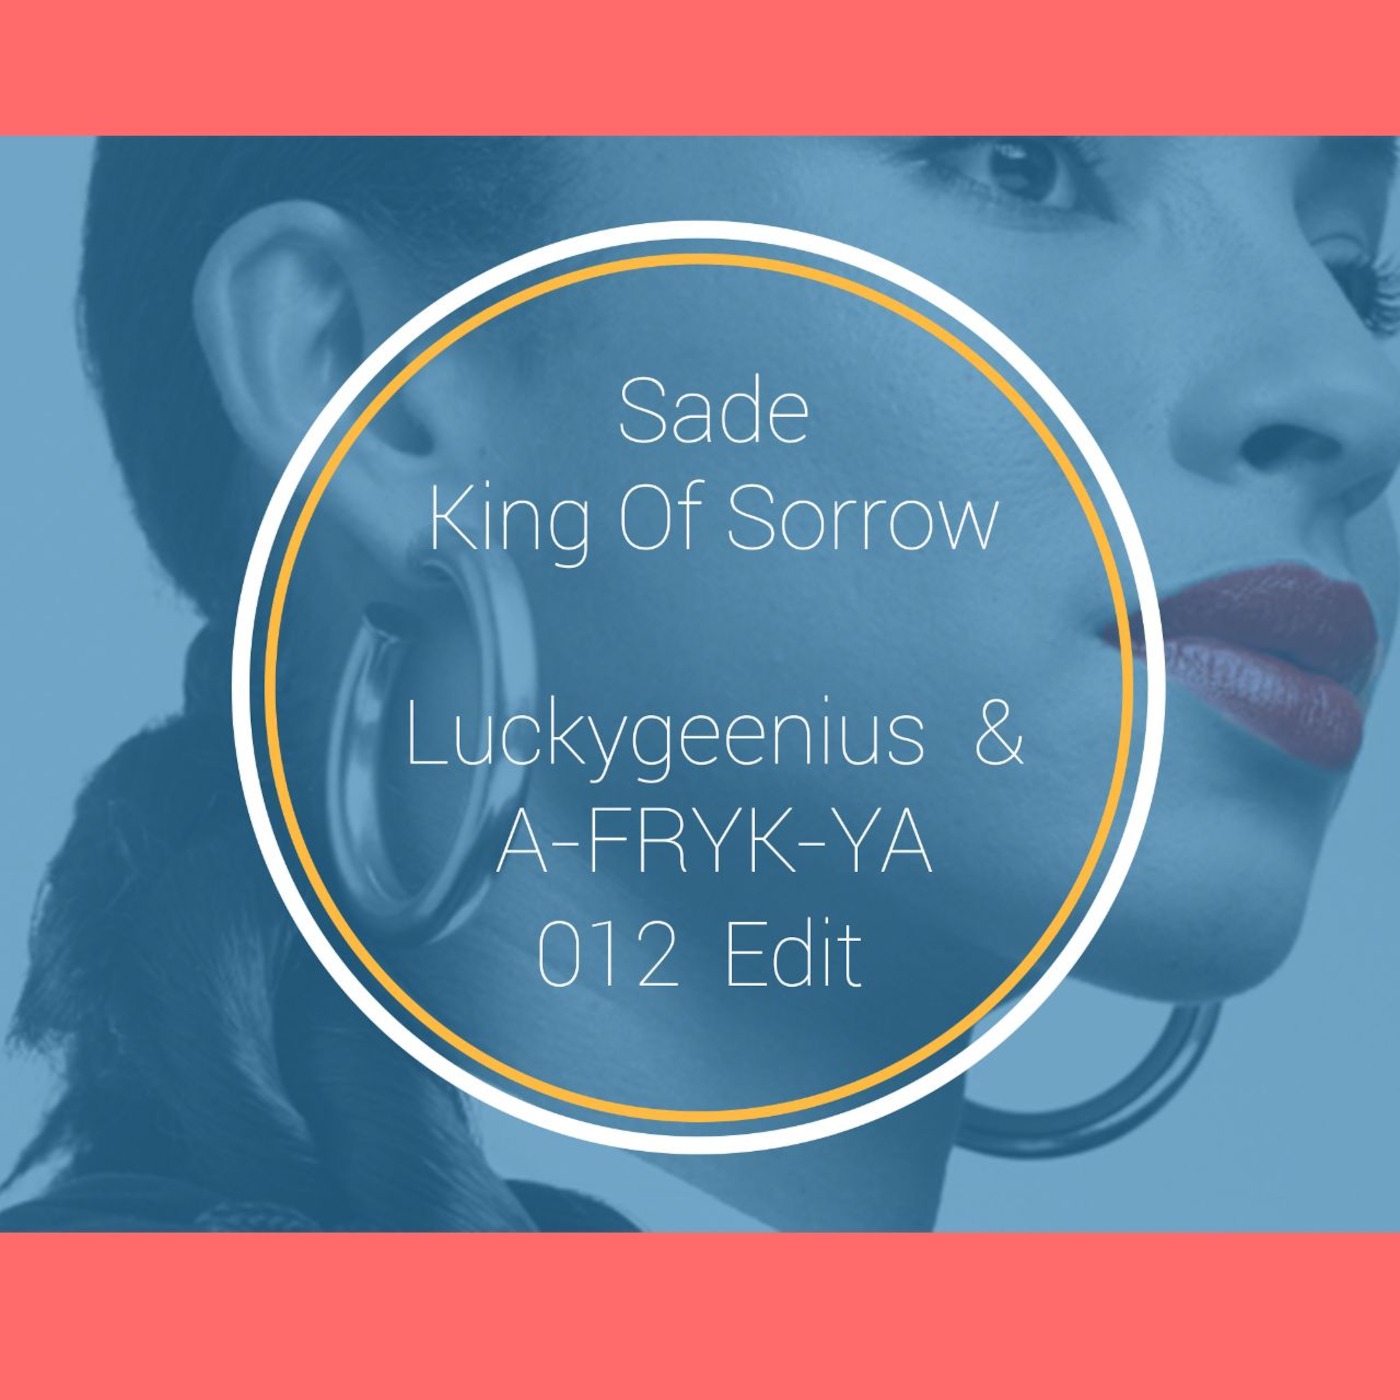 Sade King Of Sorrow - Luckygeenius & A-FRYK-YA (012 Edit)